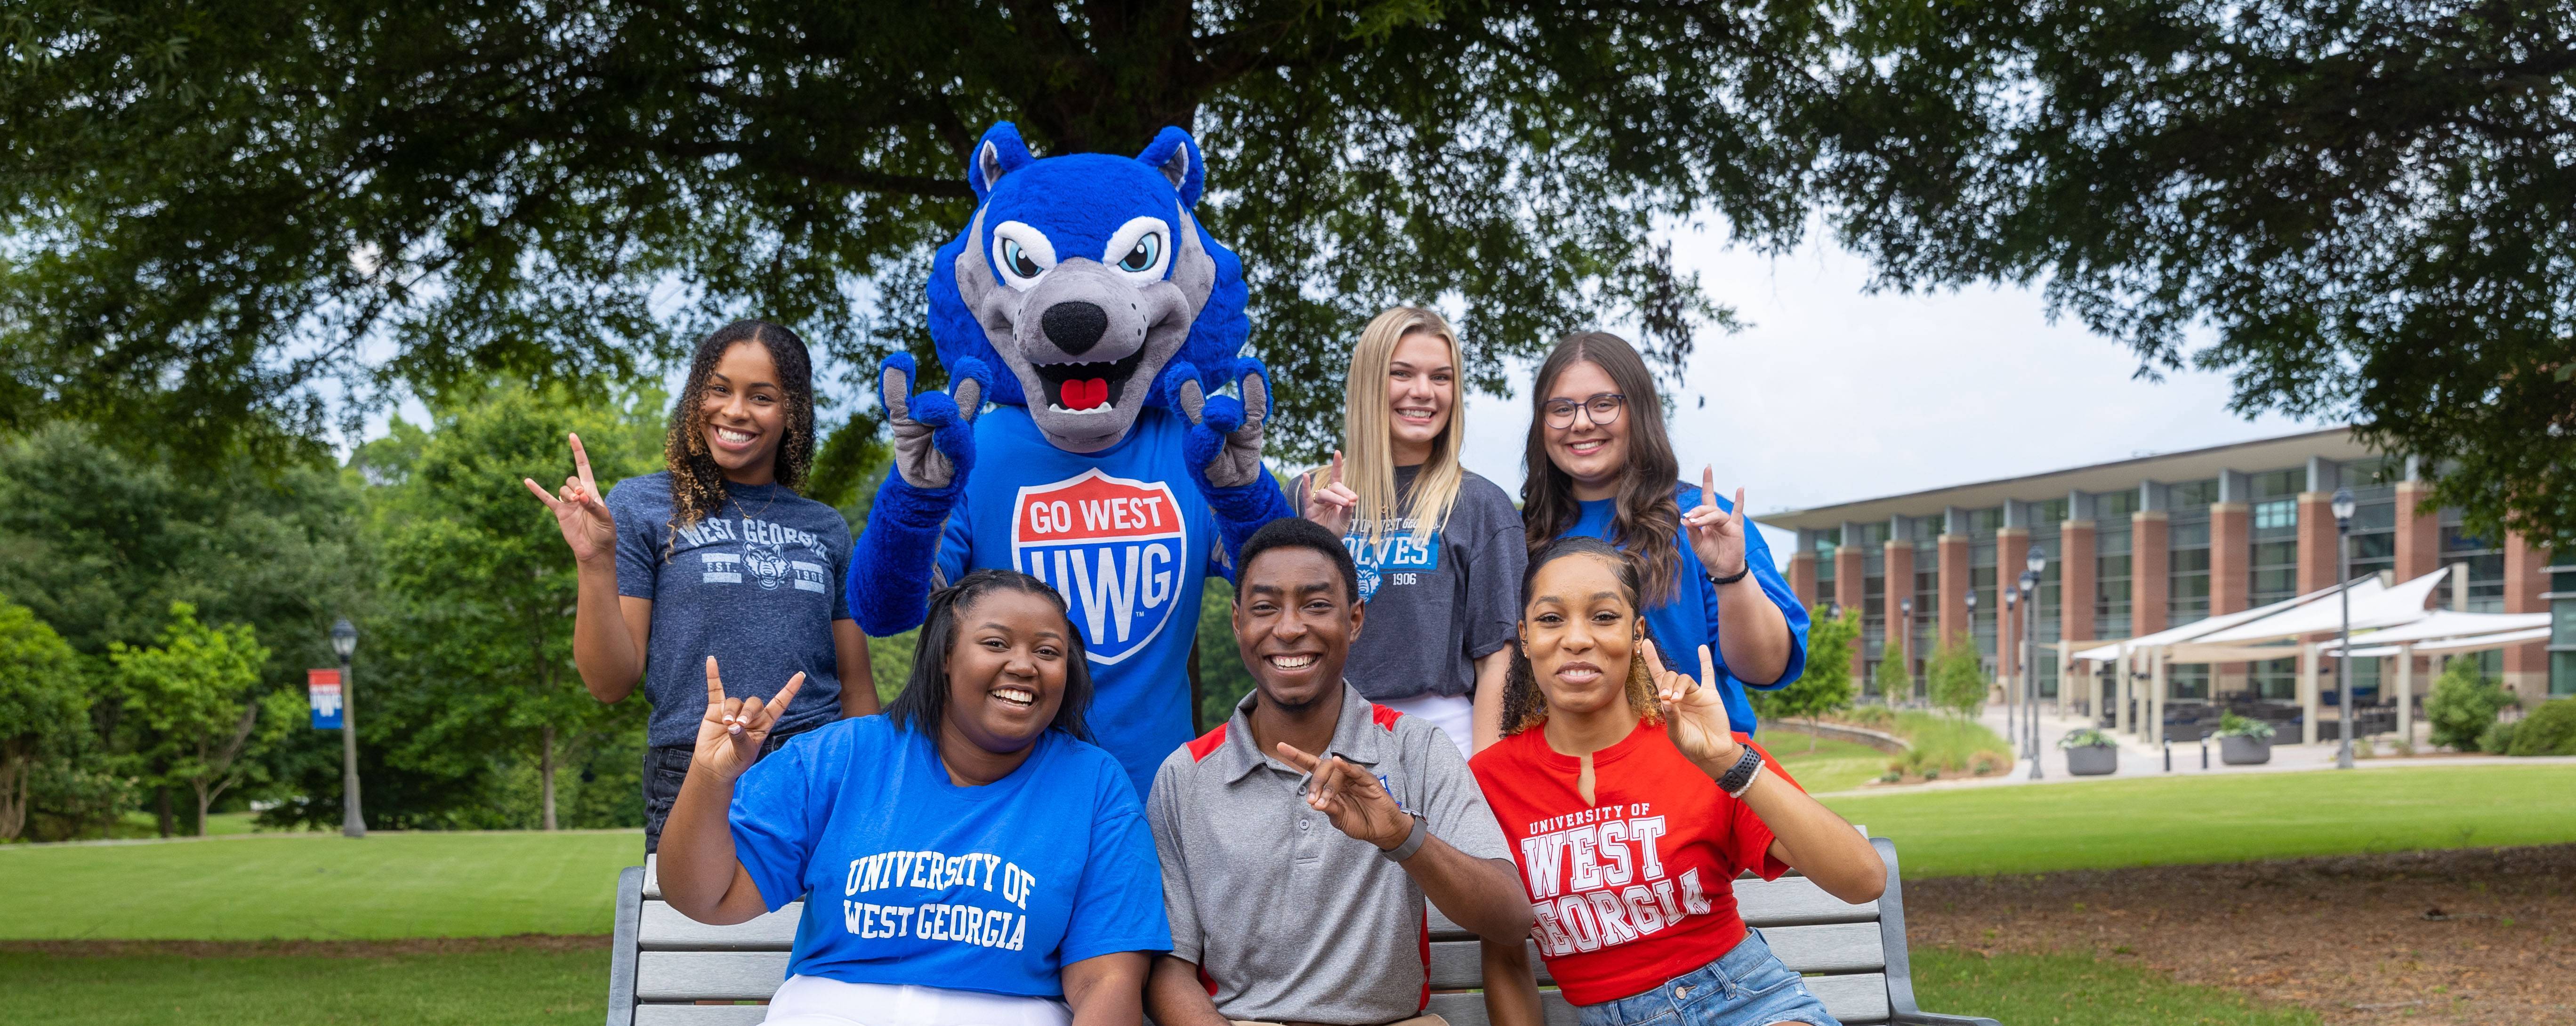 Student Social Media Ambassadors posing with Wolfie mascot